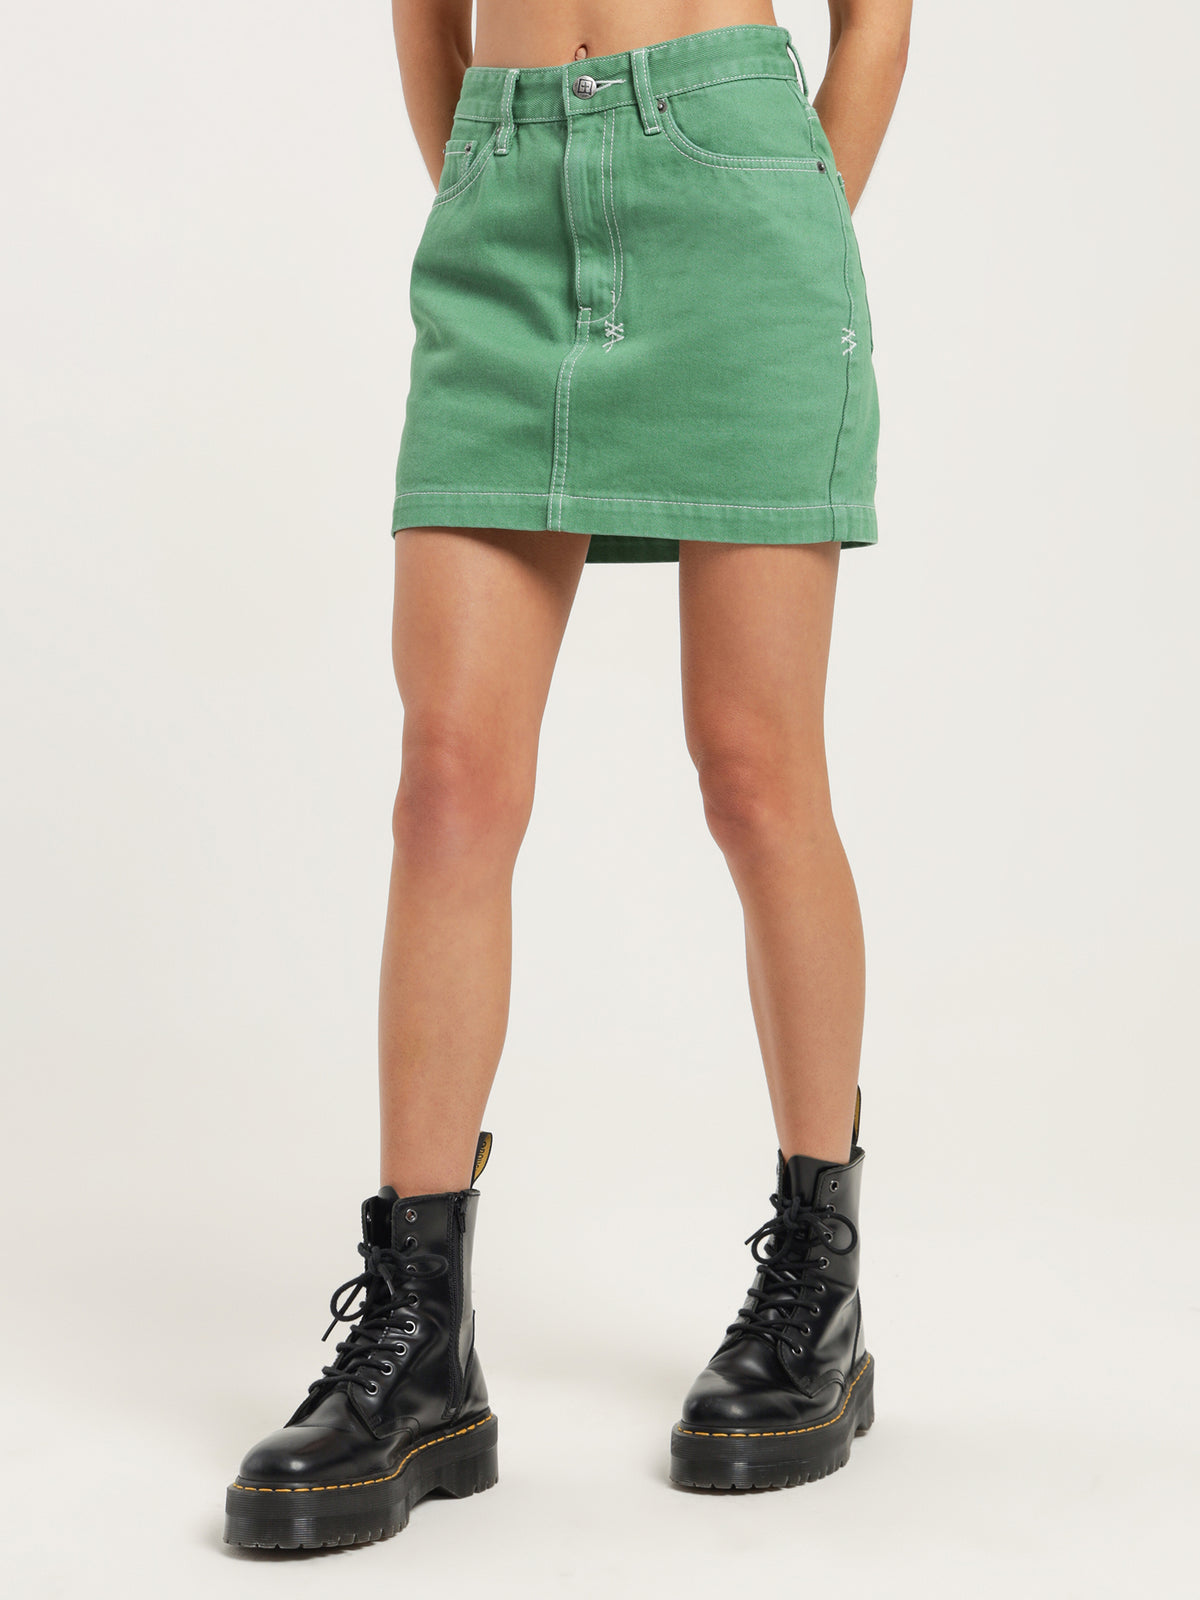 Super X Mini Denim Skirt in Jade Green